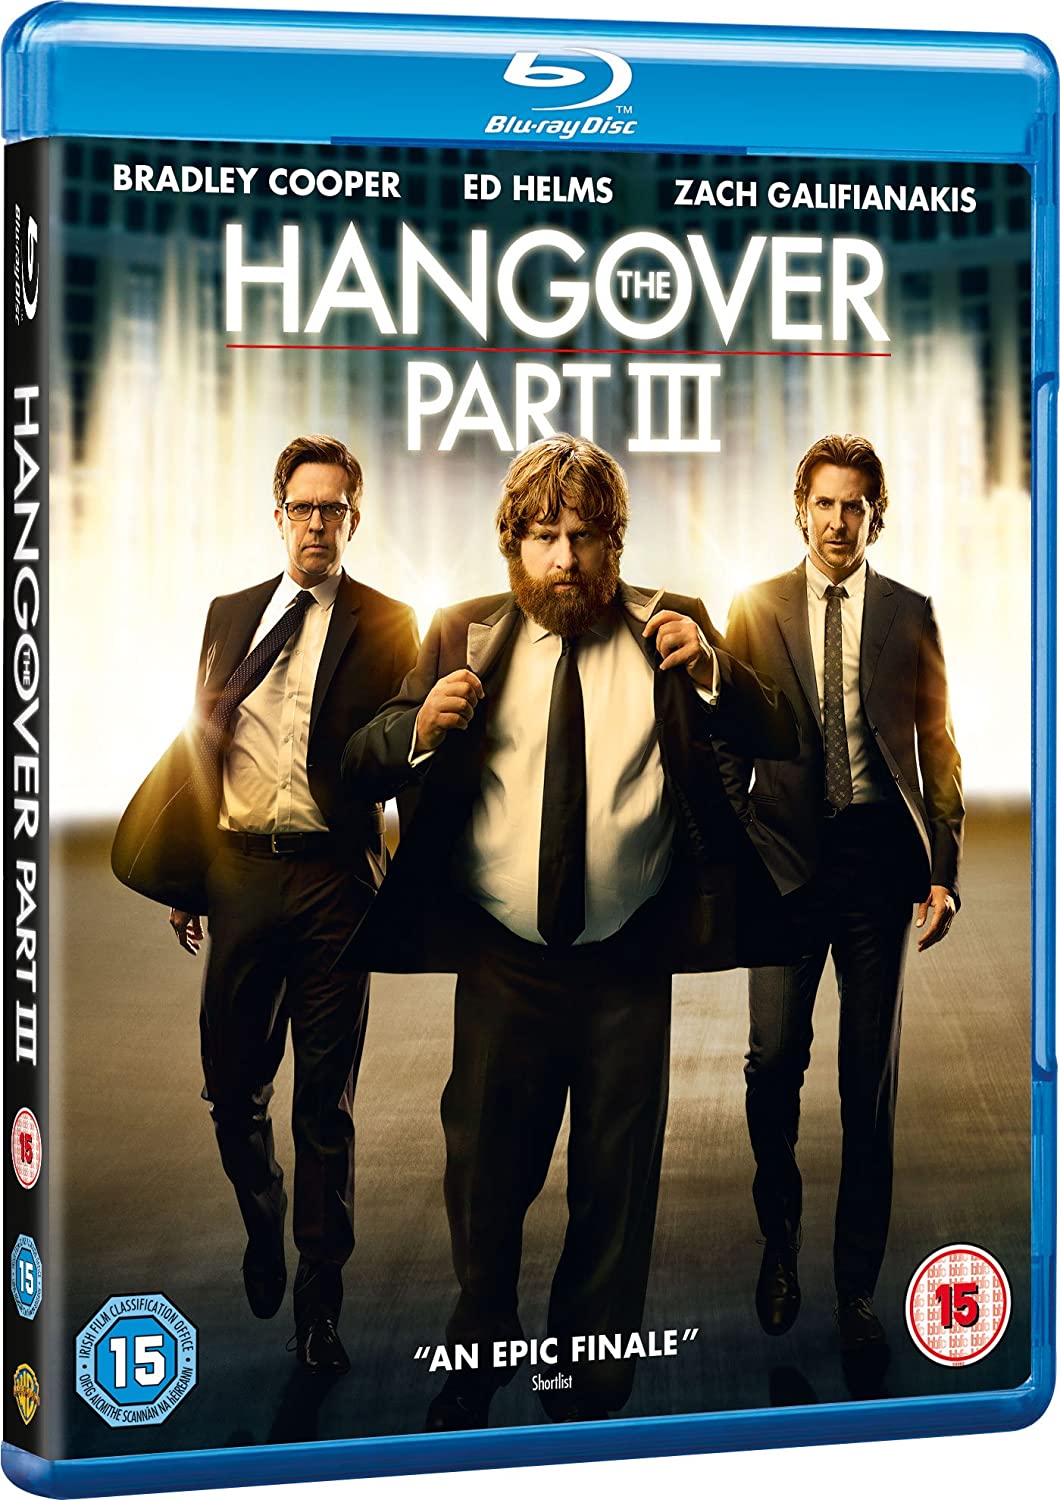 The Hangover: Part III [2013] [Region Free] - Comedy [Blu-ray]